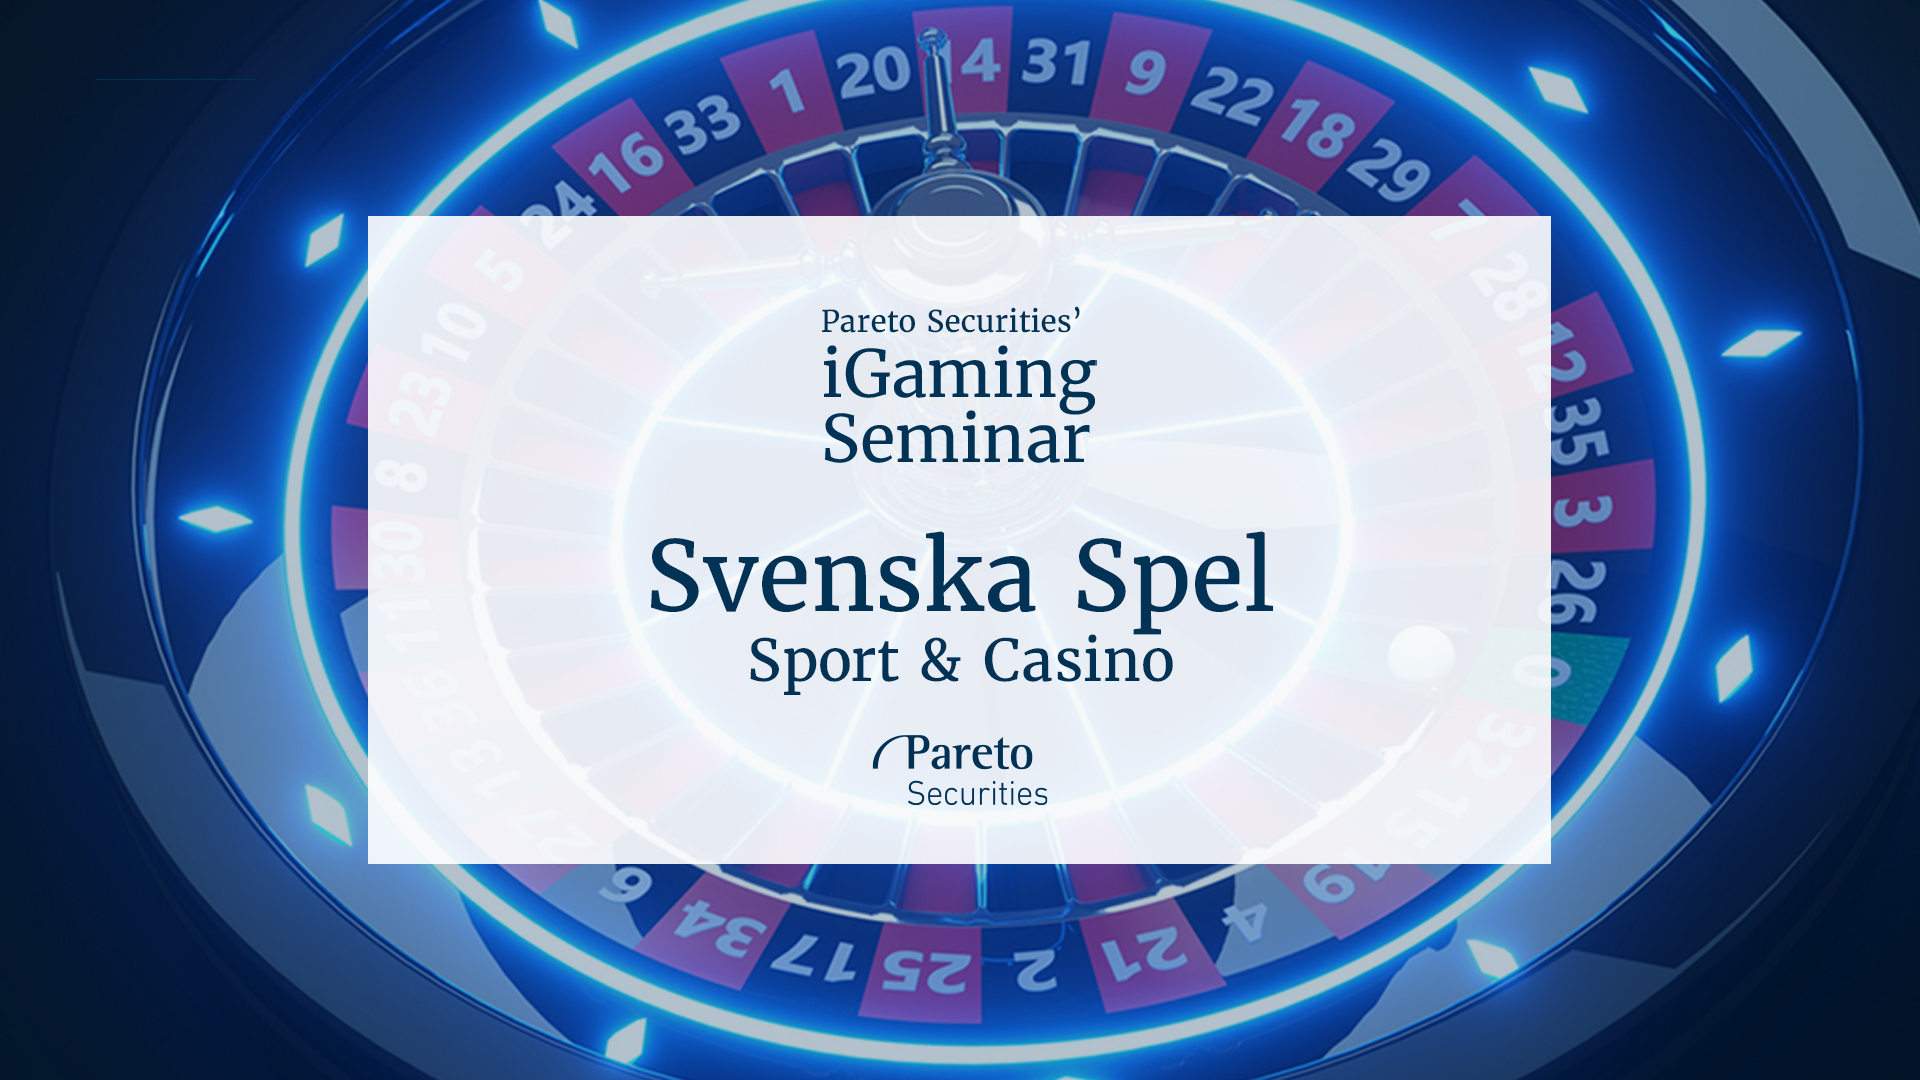 Svenska Spel Sport & Casino / Pareto Securities’ virtual iGaming seminar